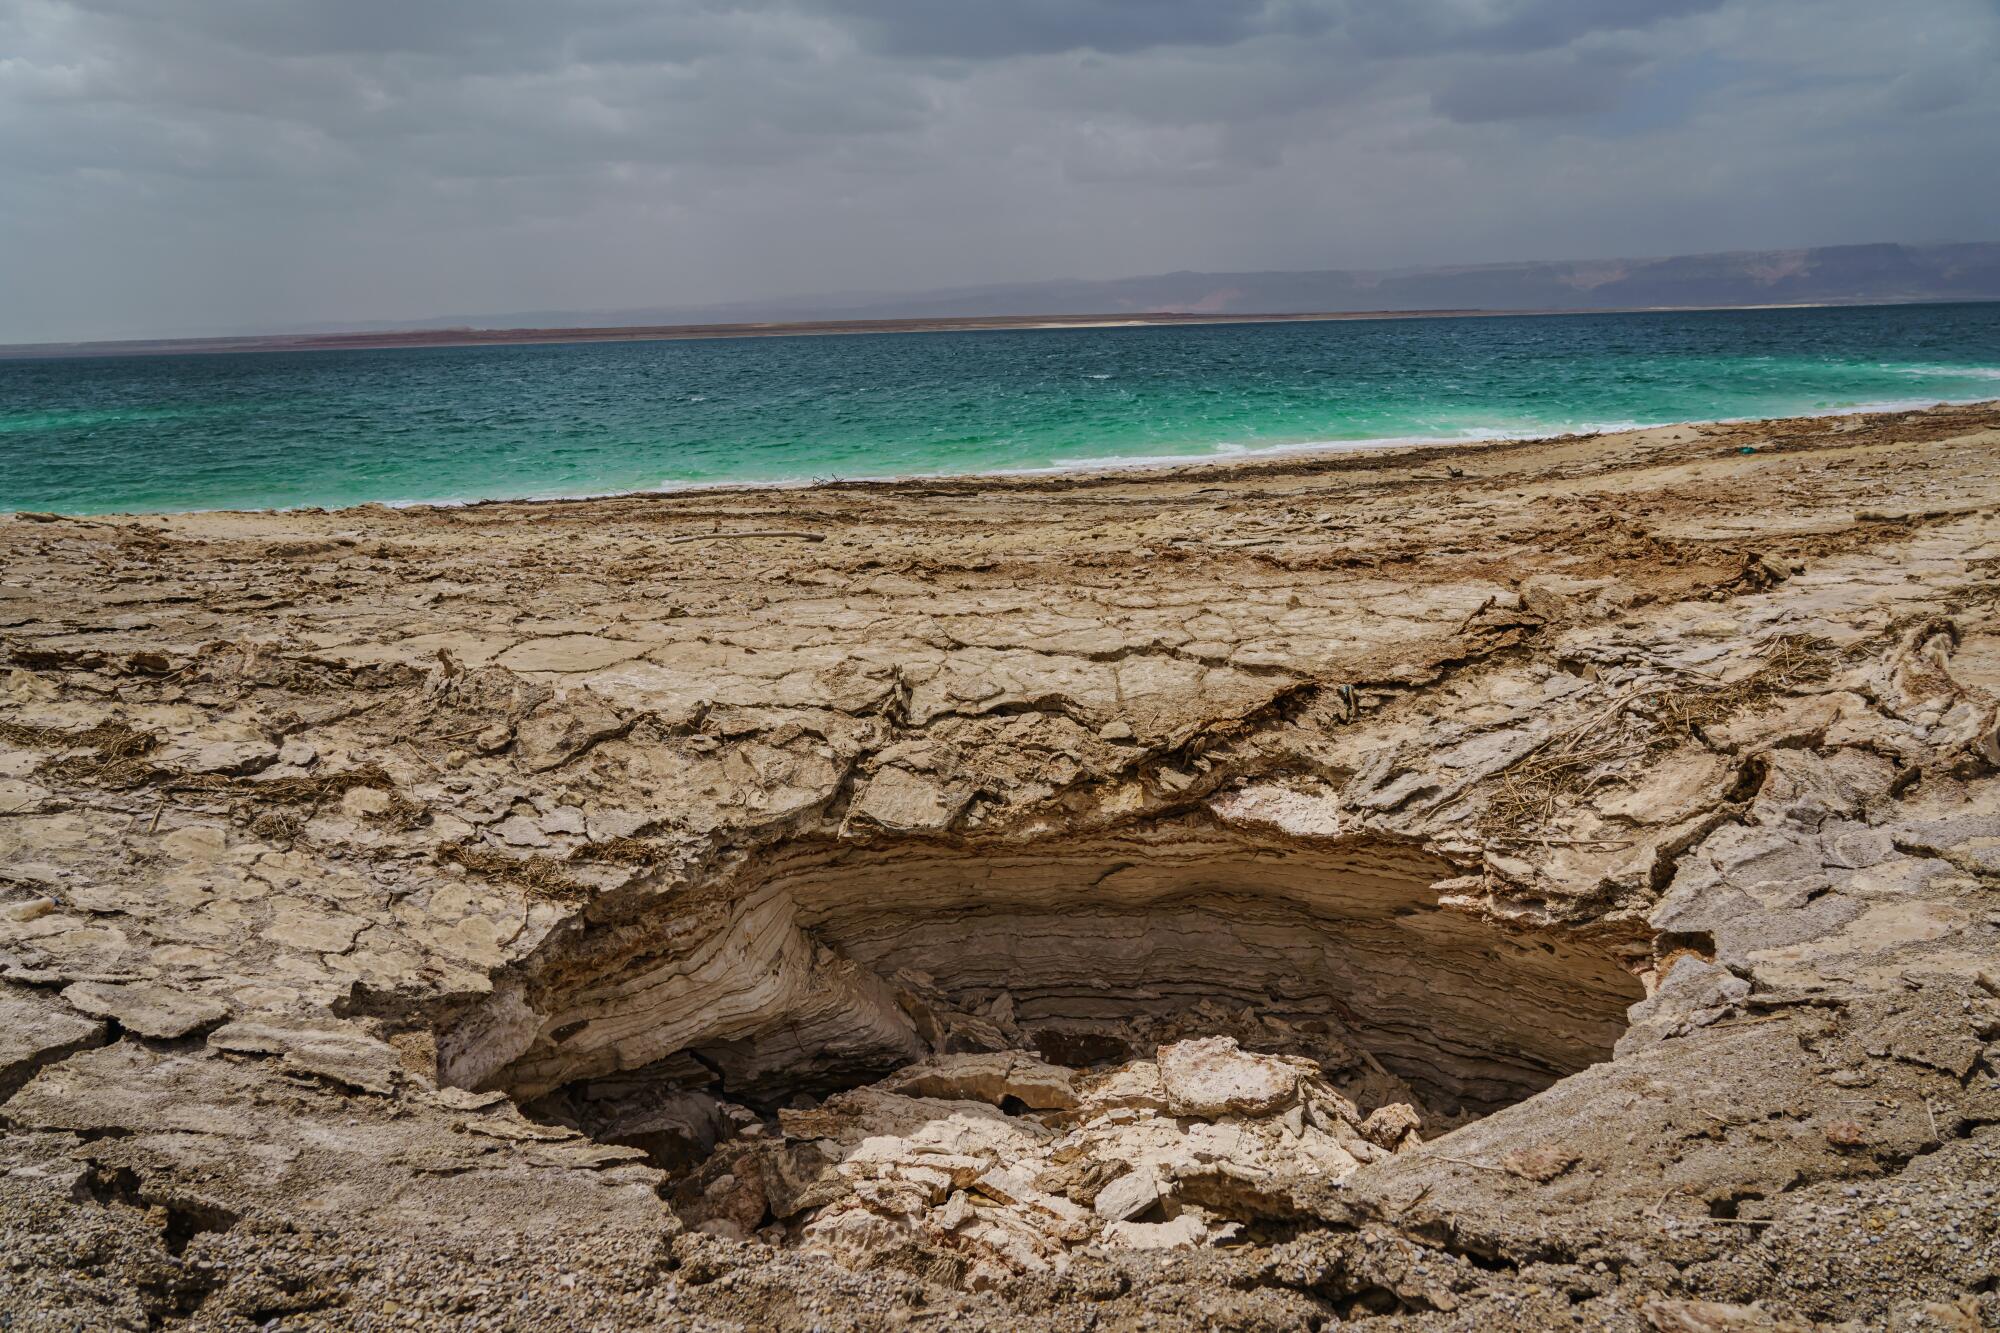  A sinkhole by the Dead Sea